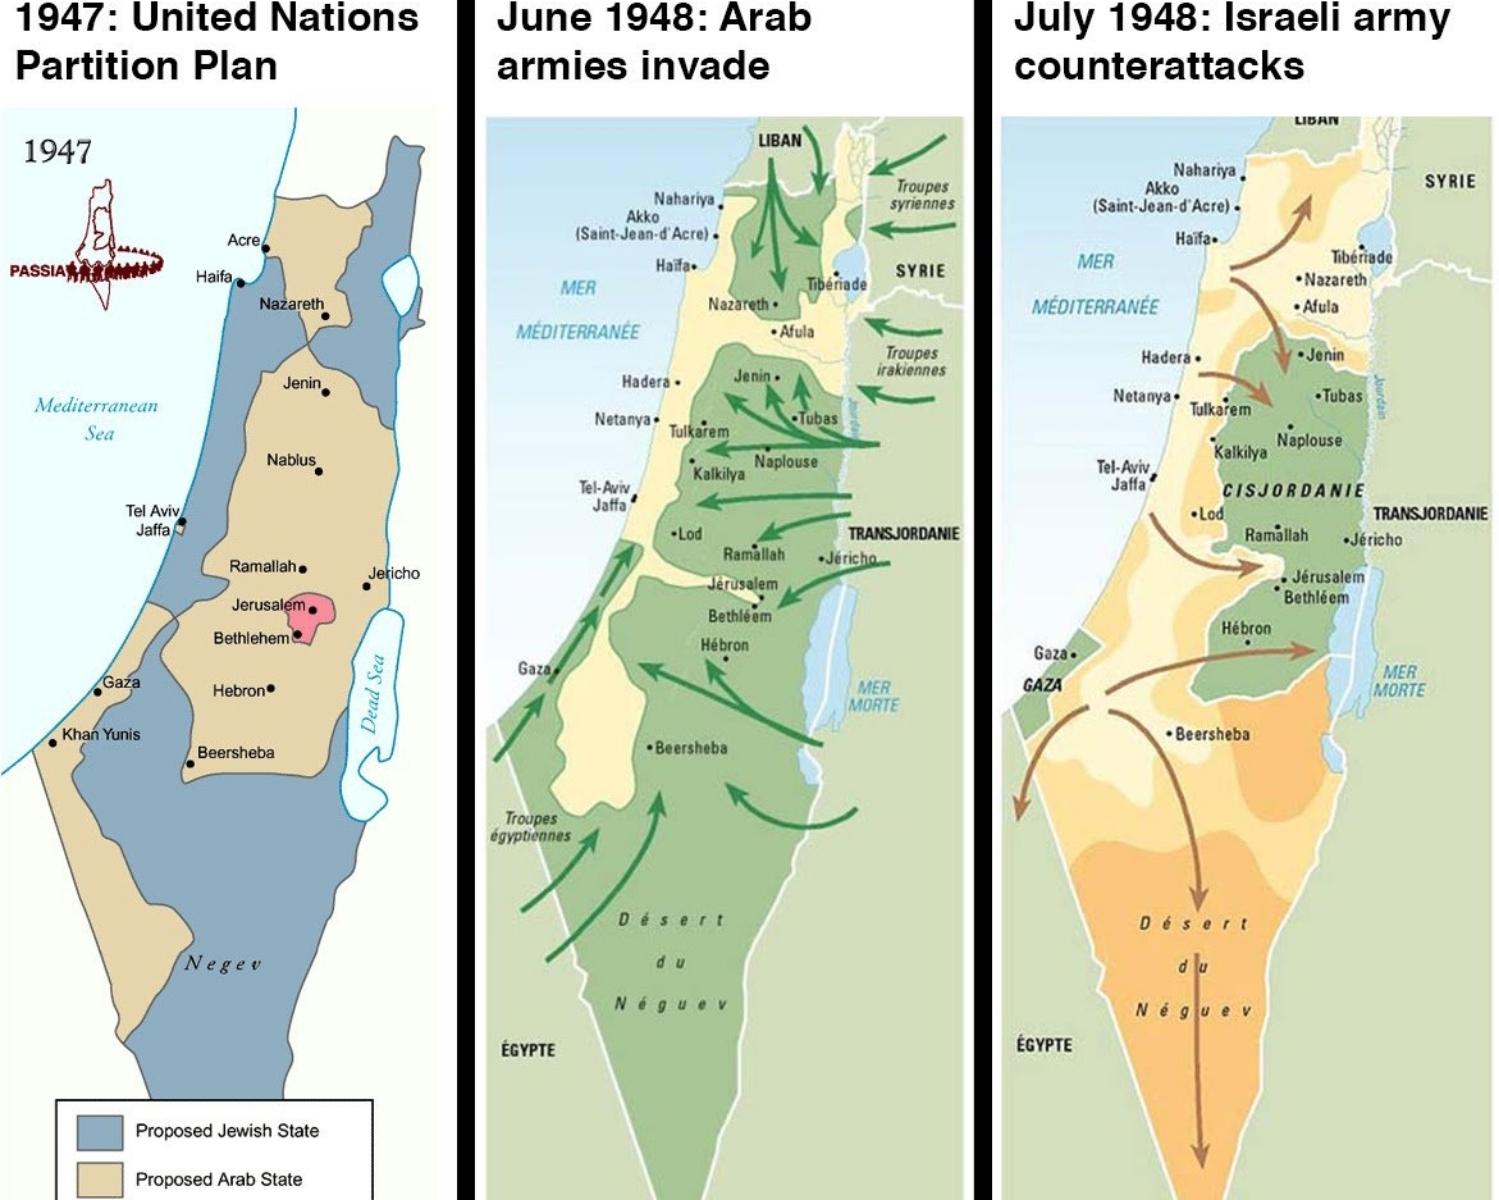 The 1948 Arab-Israeli war